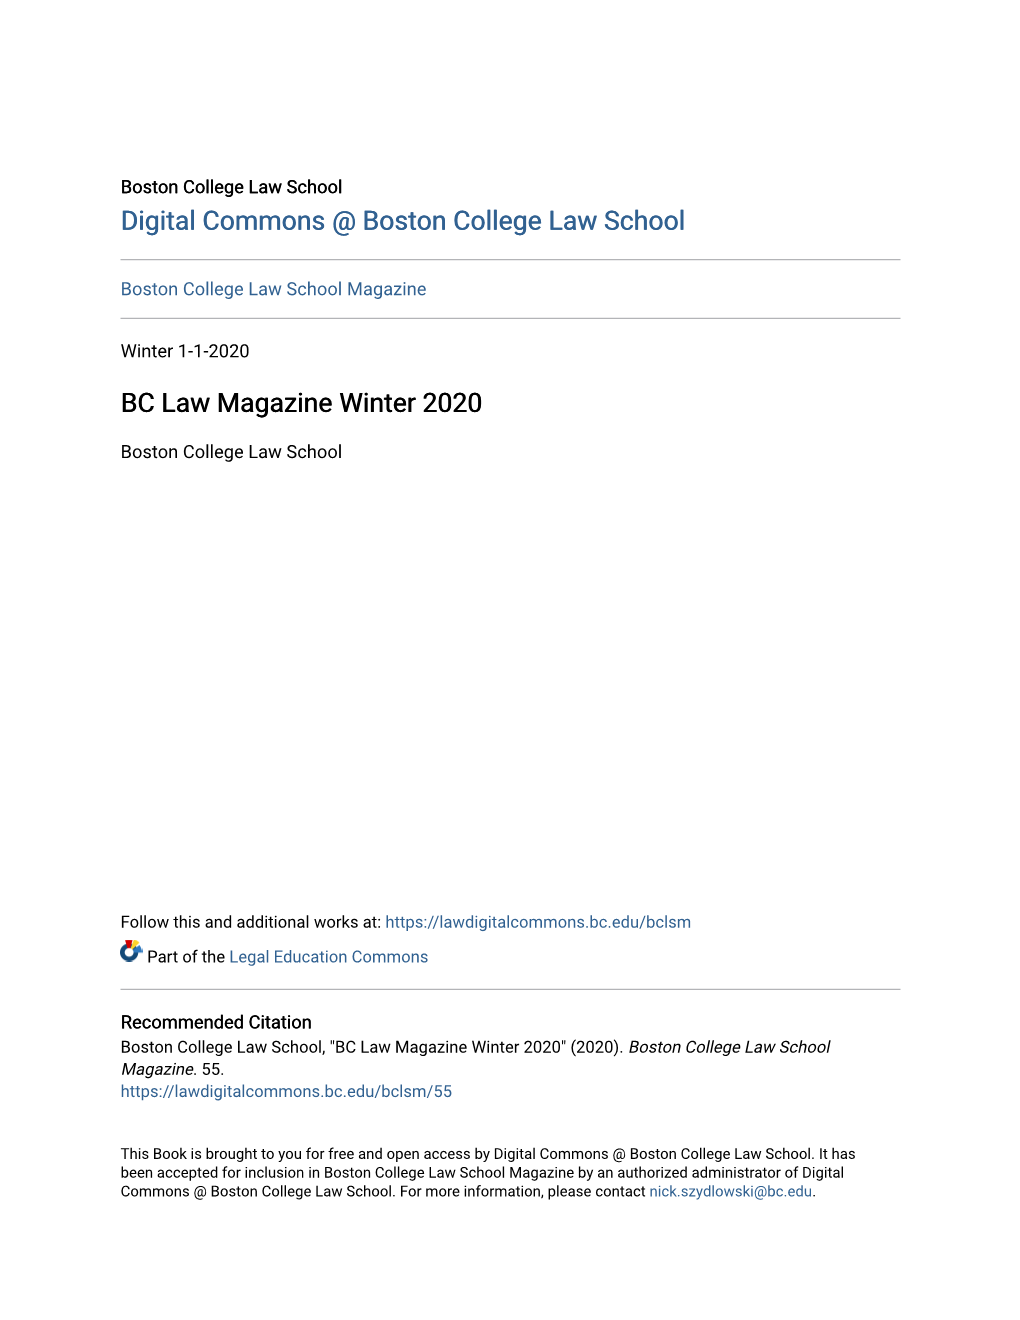 BC Law Magazine Winter 2020